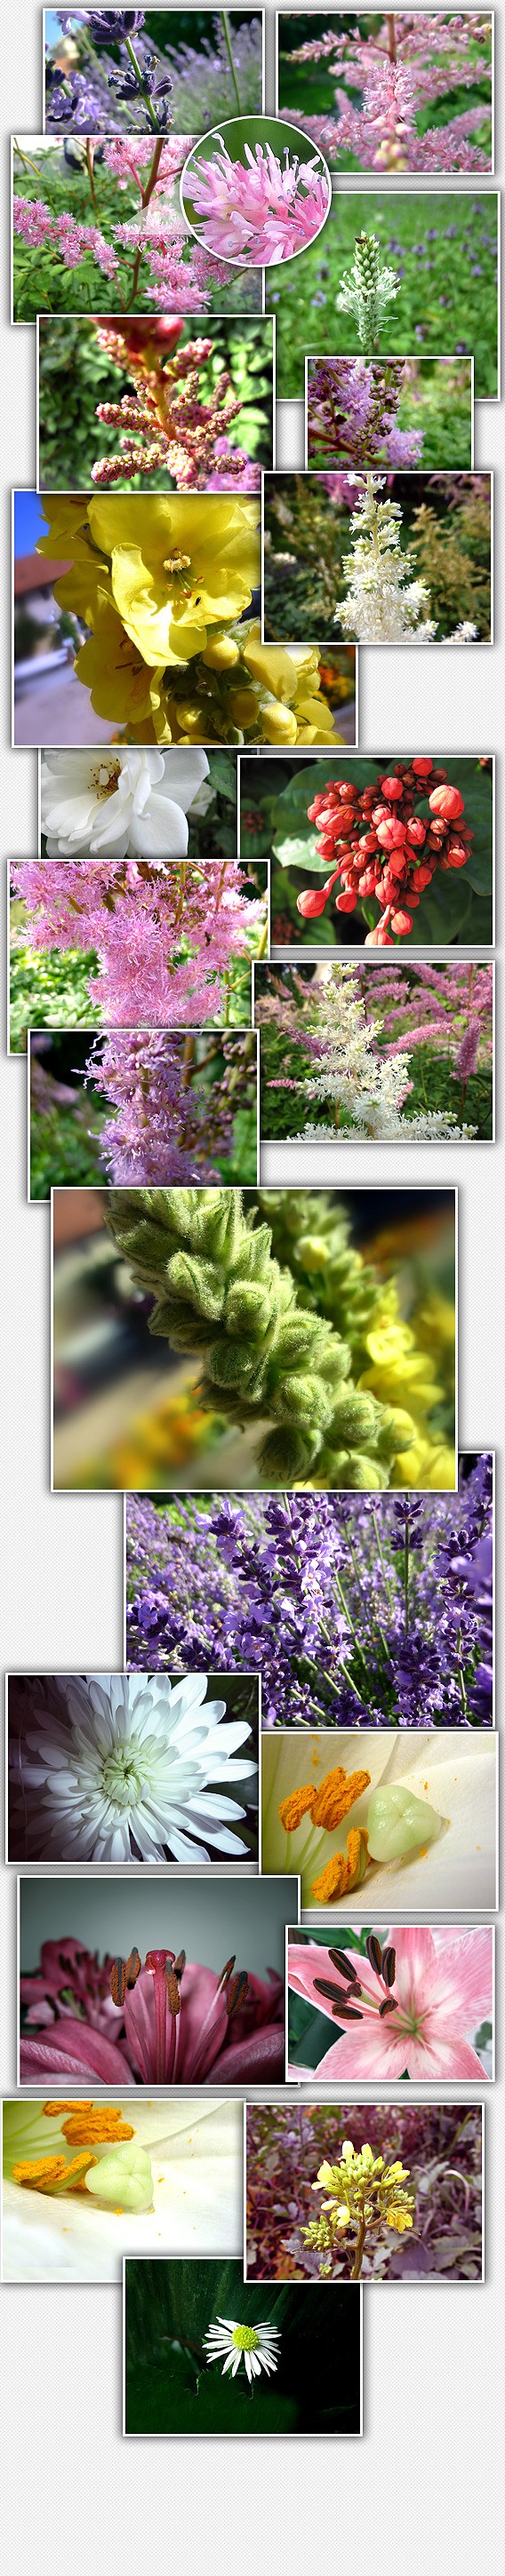 Download 23 High Resolution Professional Flower Stock Photos - Stock Images Lorelei Web Design